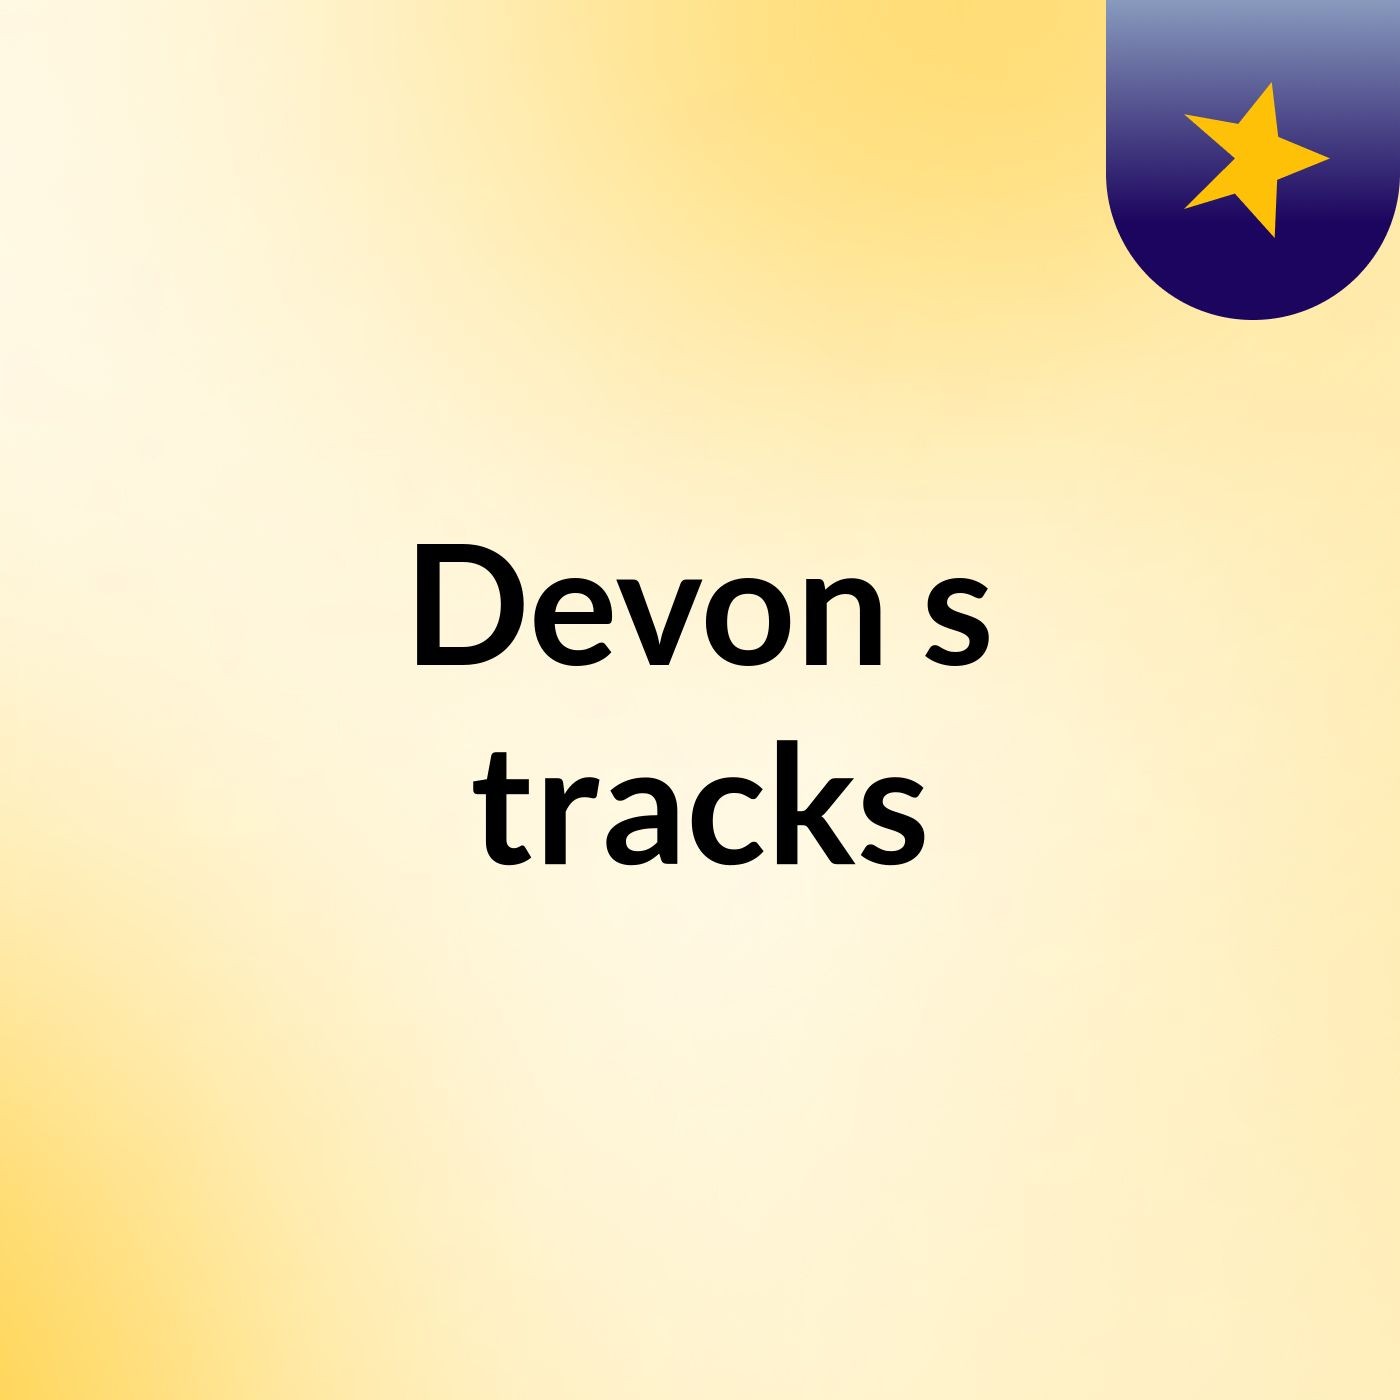 Devon's tracks